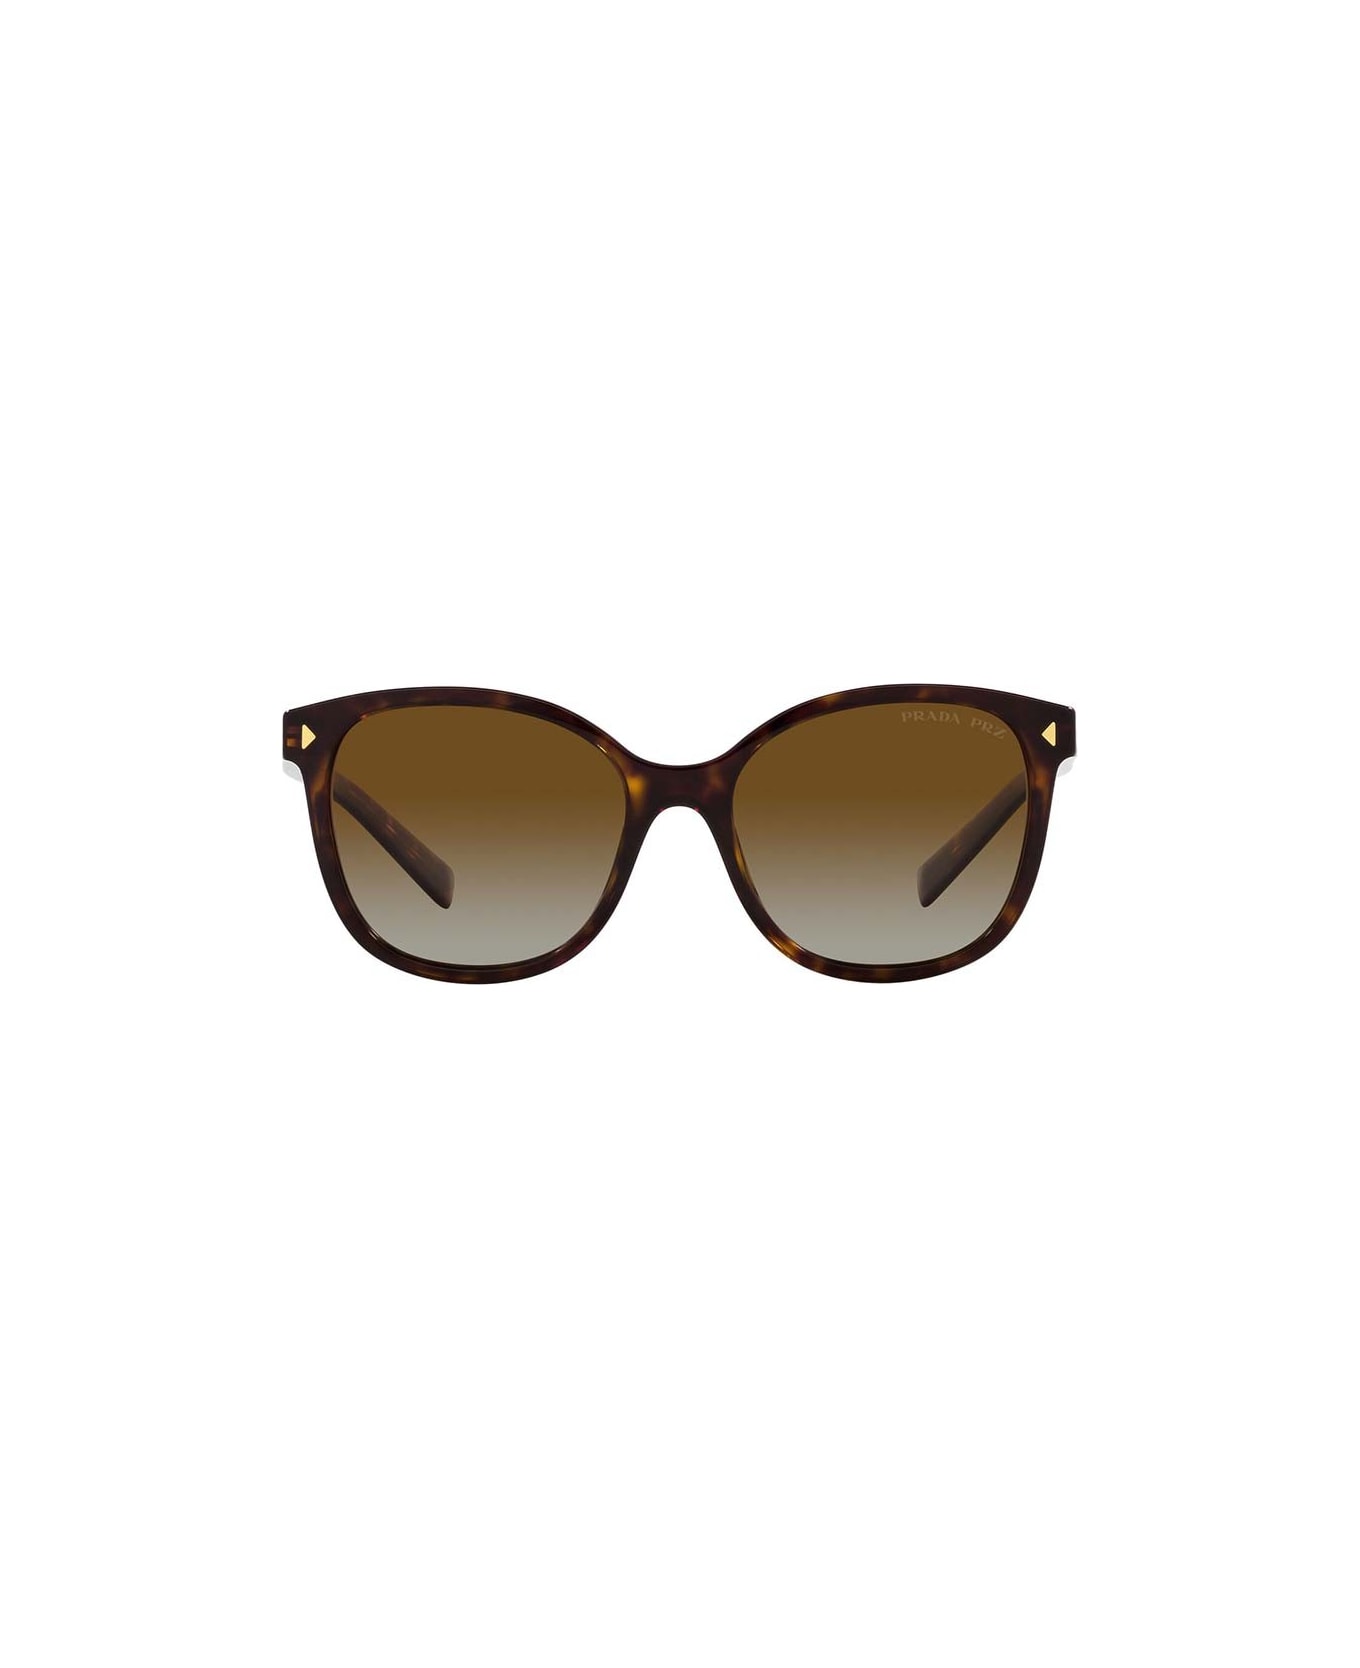 Prada Eyewear Sunglasses - 2AU6E1 サングラス